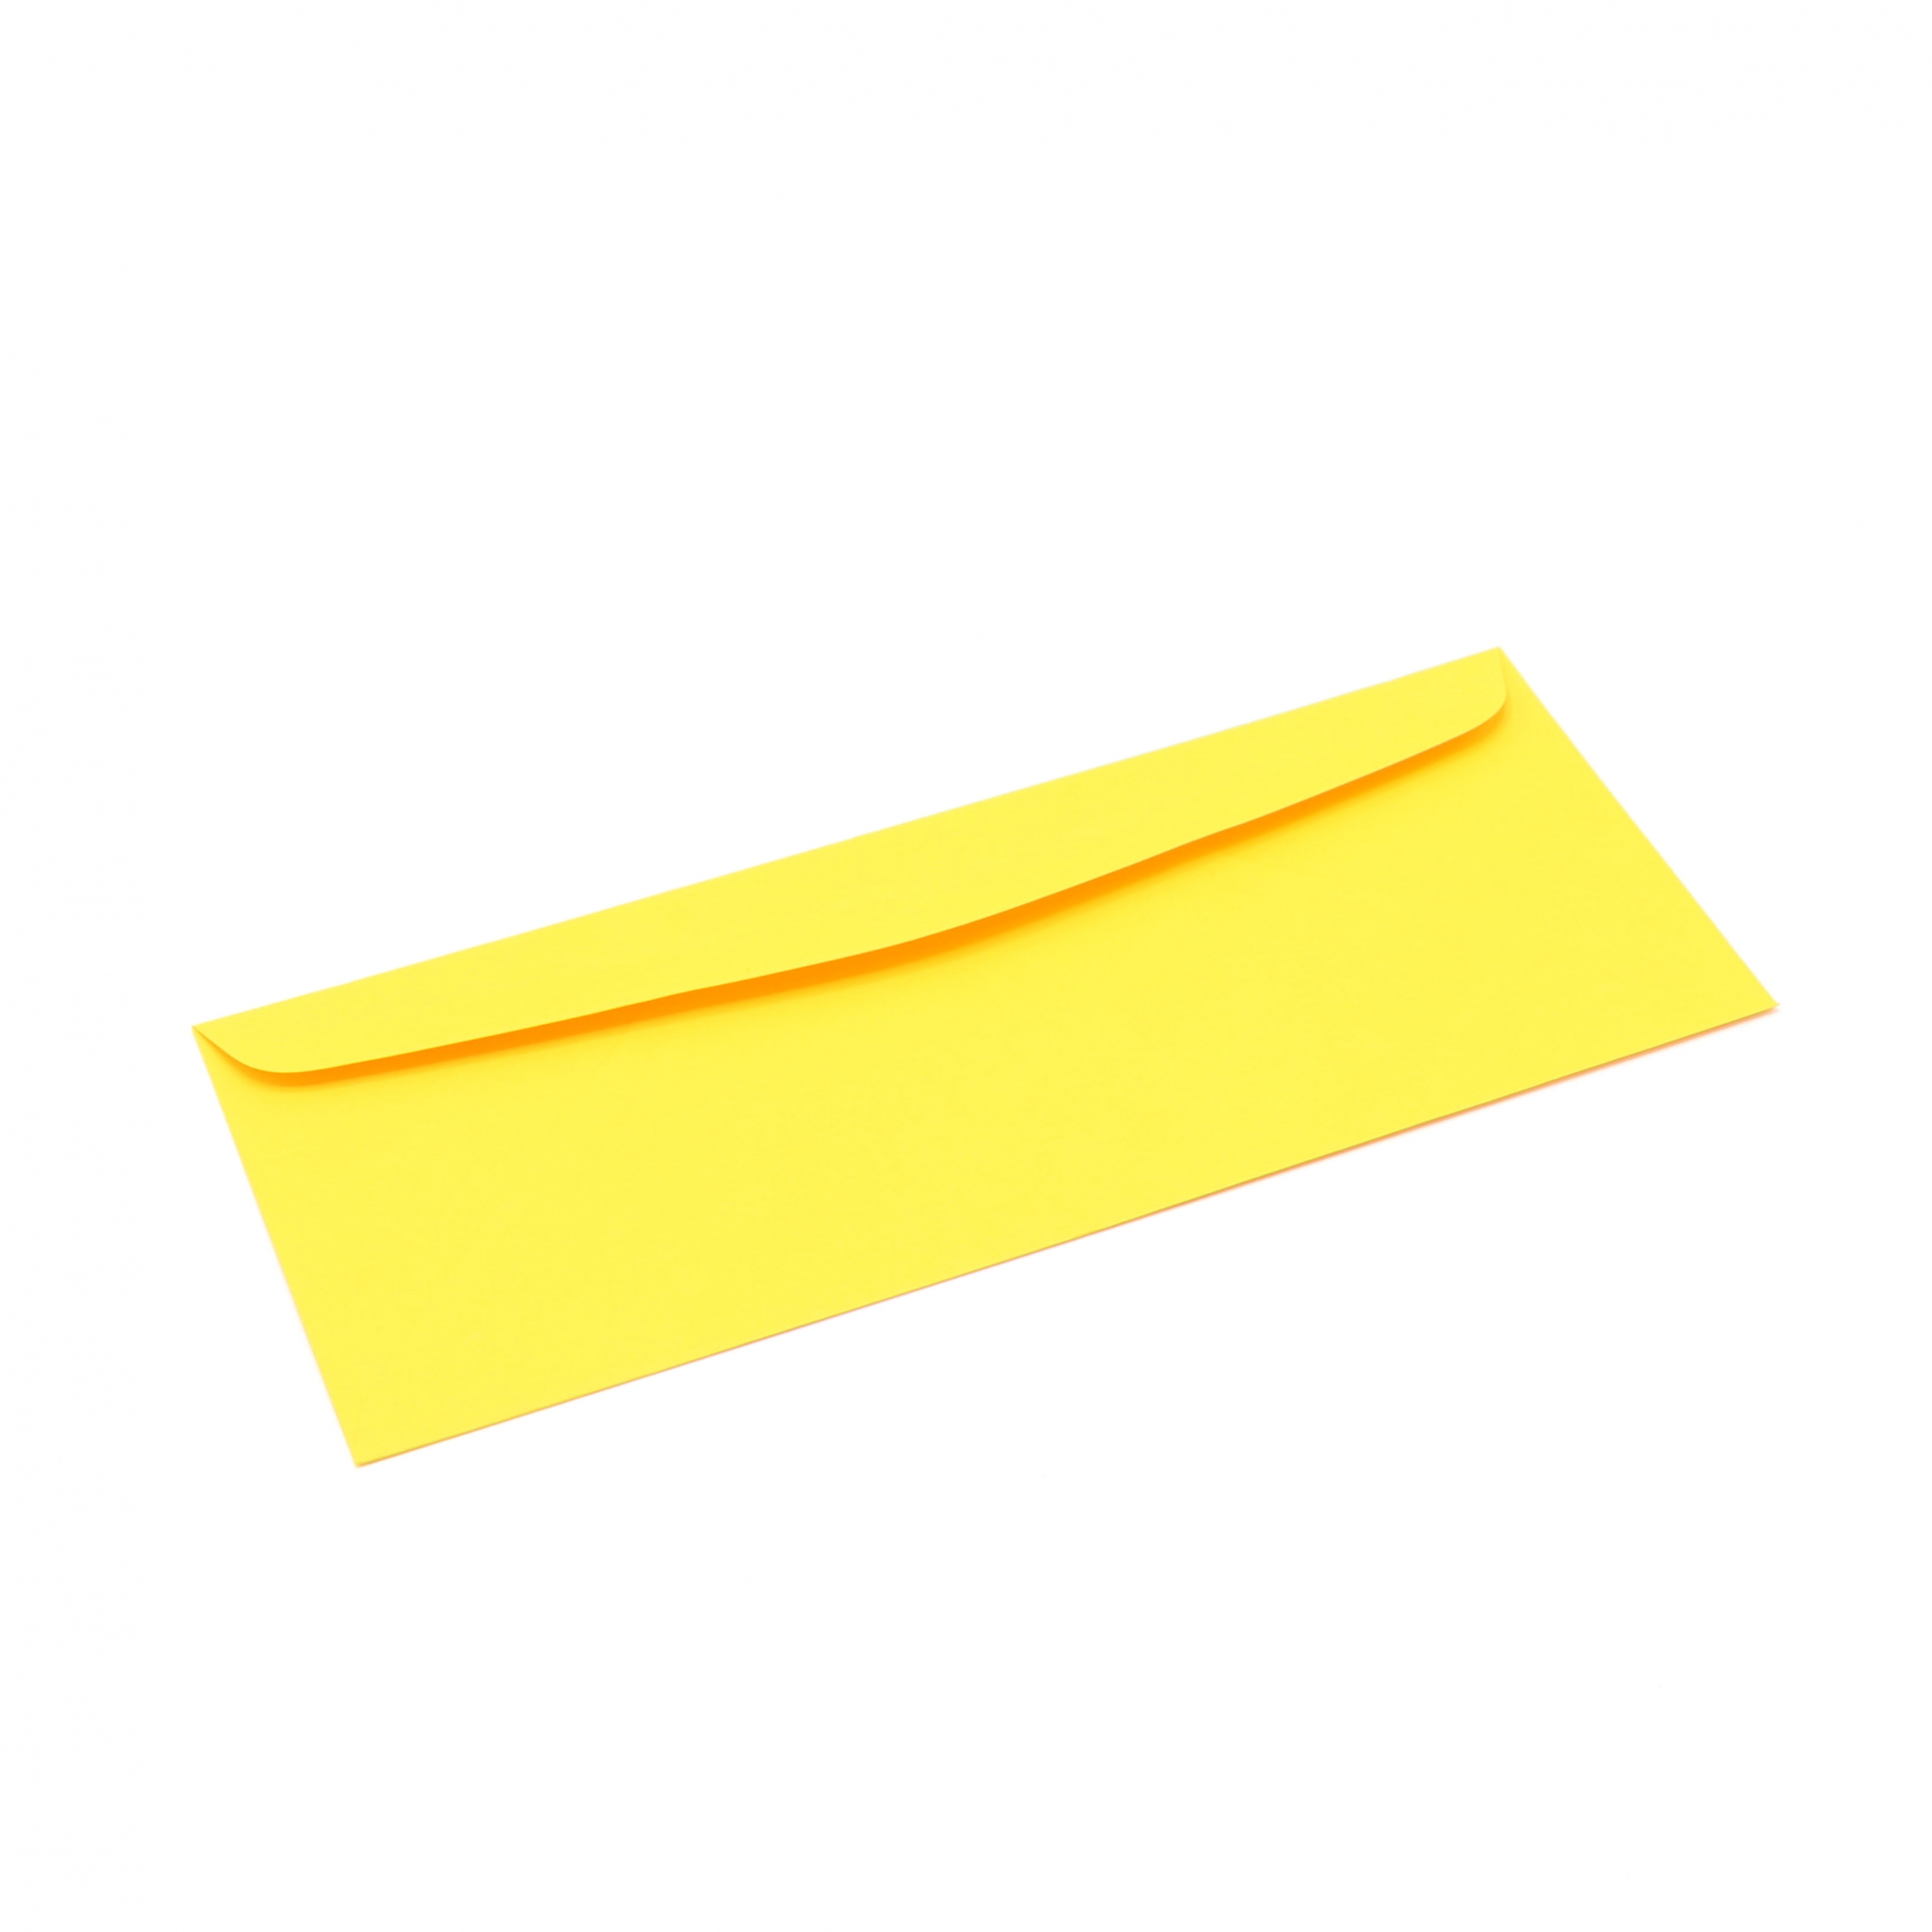 Astrobright Envelope Galaxy Gold #10 24lb 500/box | Paper, Envelopes ...